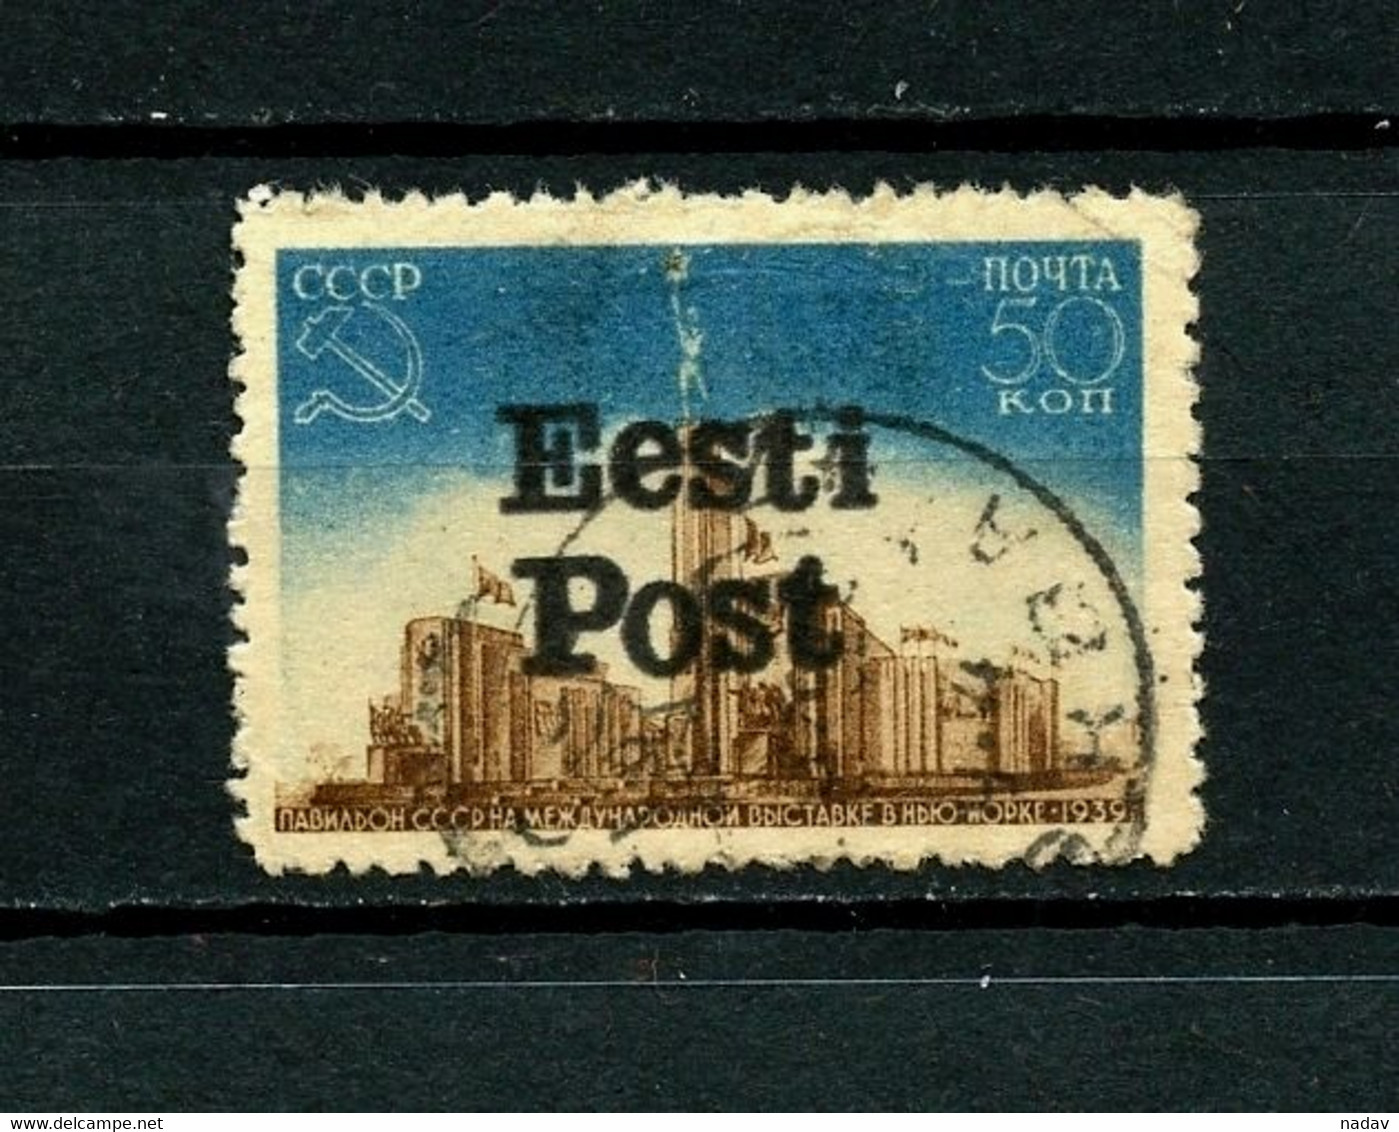 Estonia, Elwa, 1941, Used - 1941-43 Deutsche Besatzung